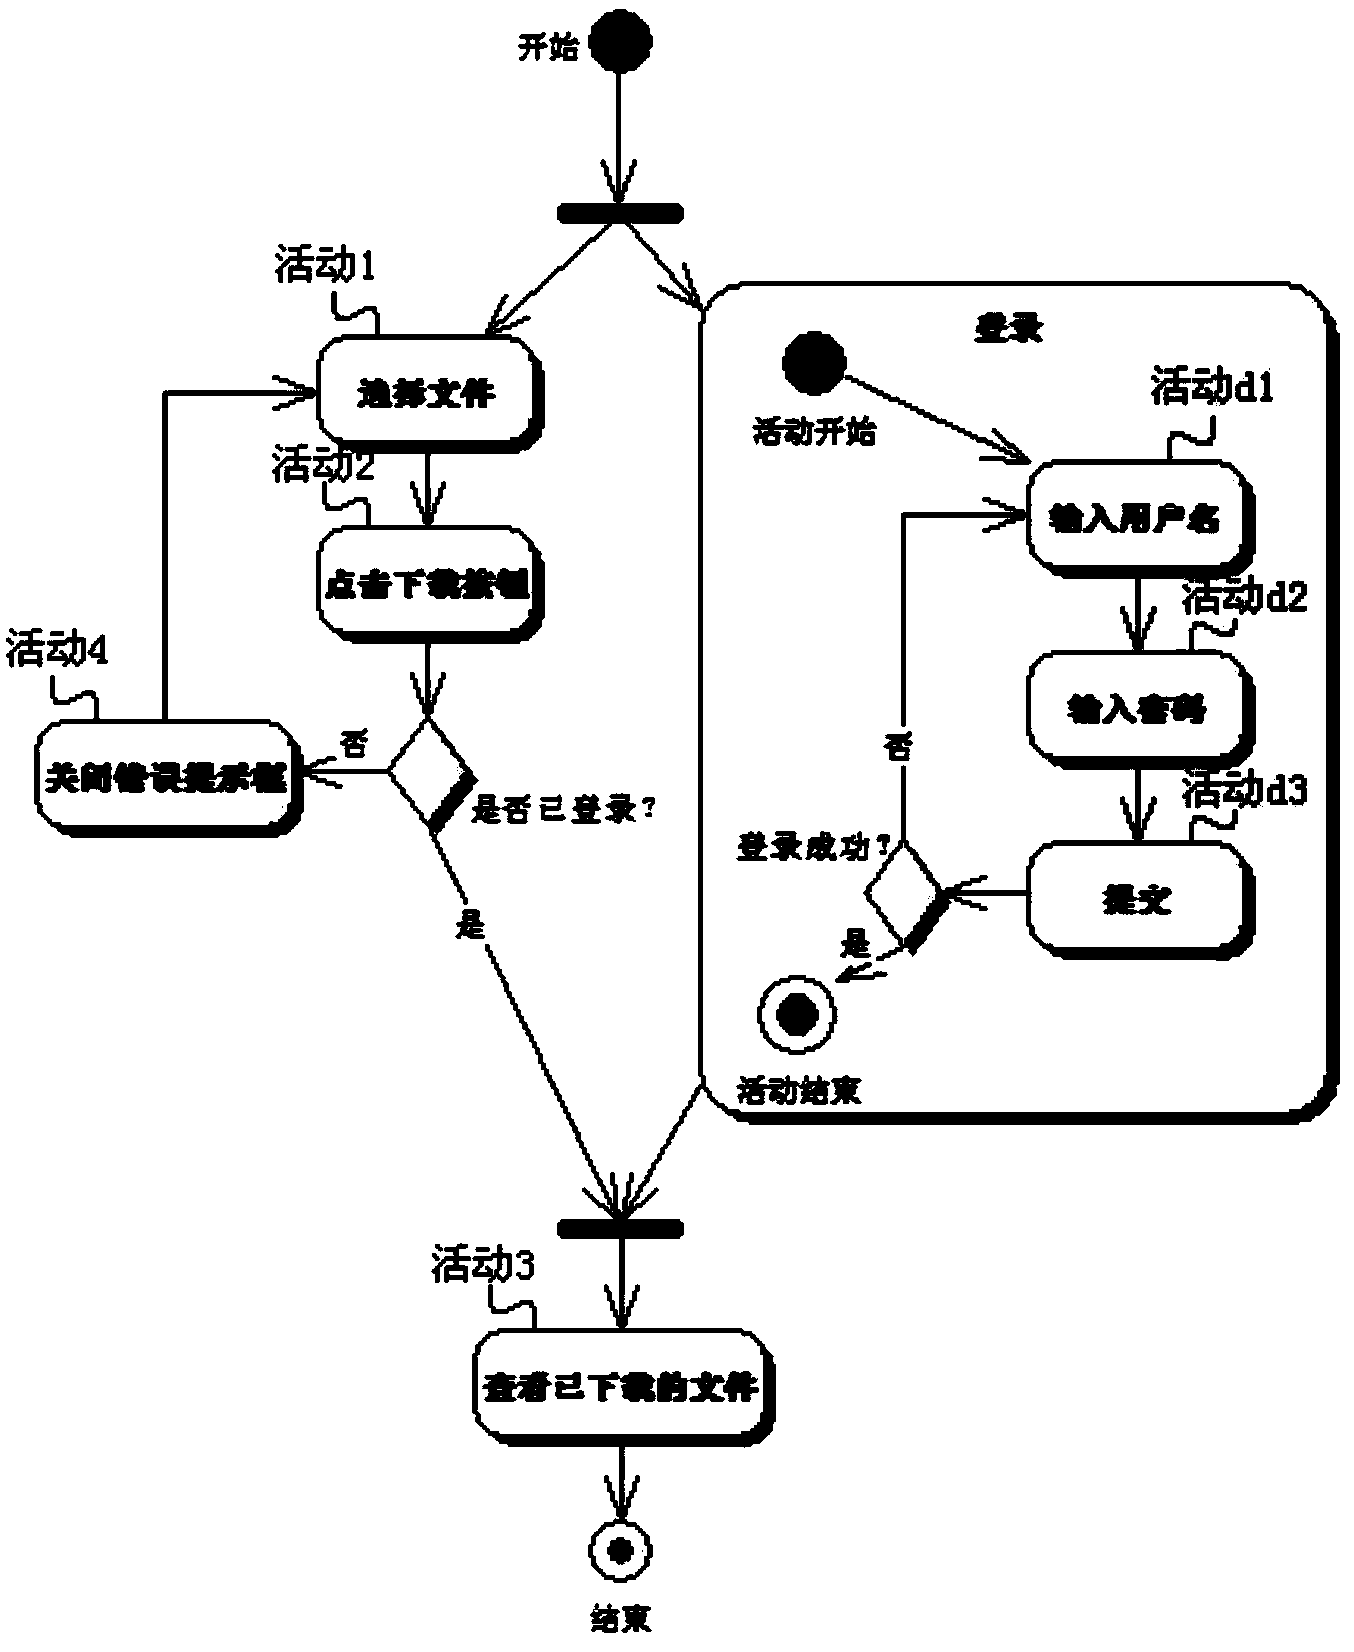 GUI testing method based on UML activity diagrams